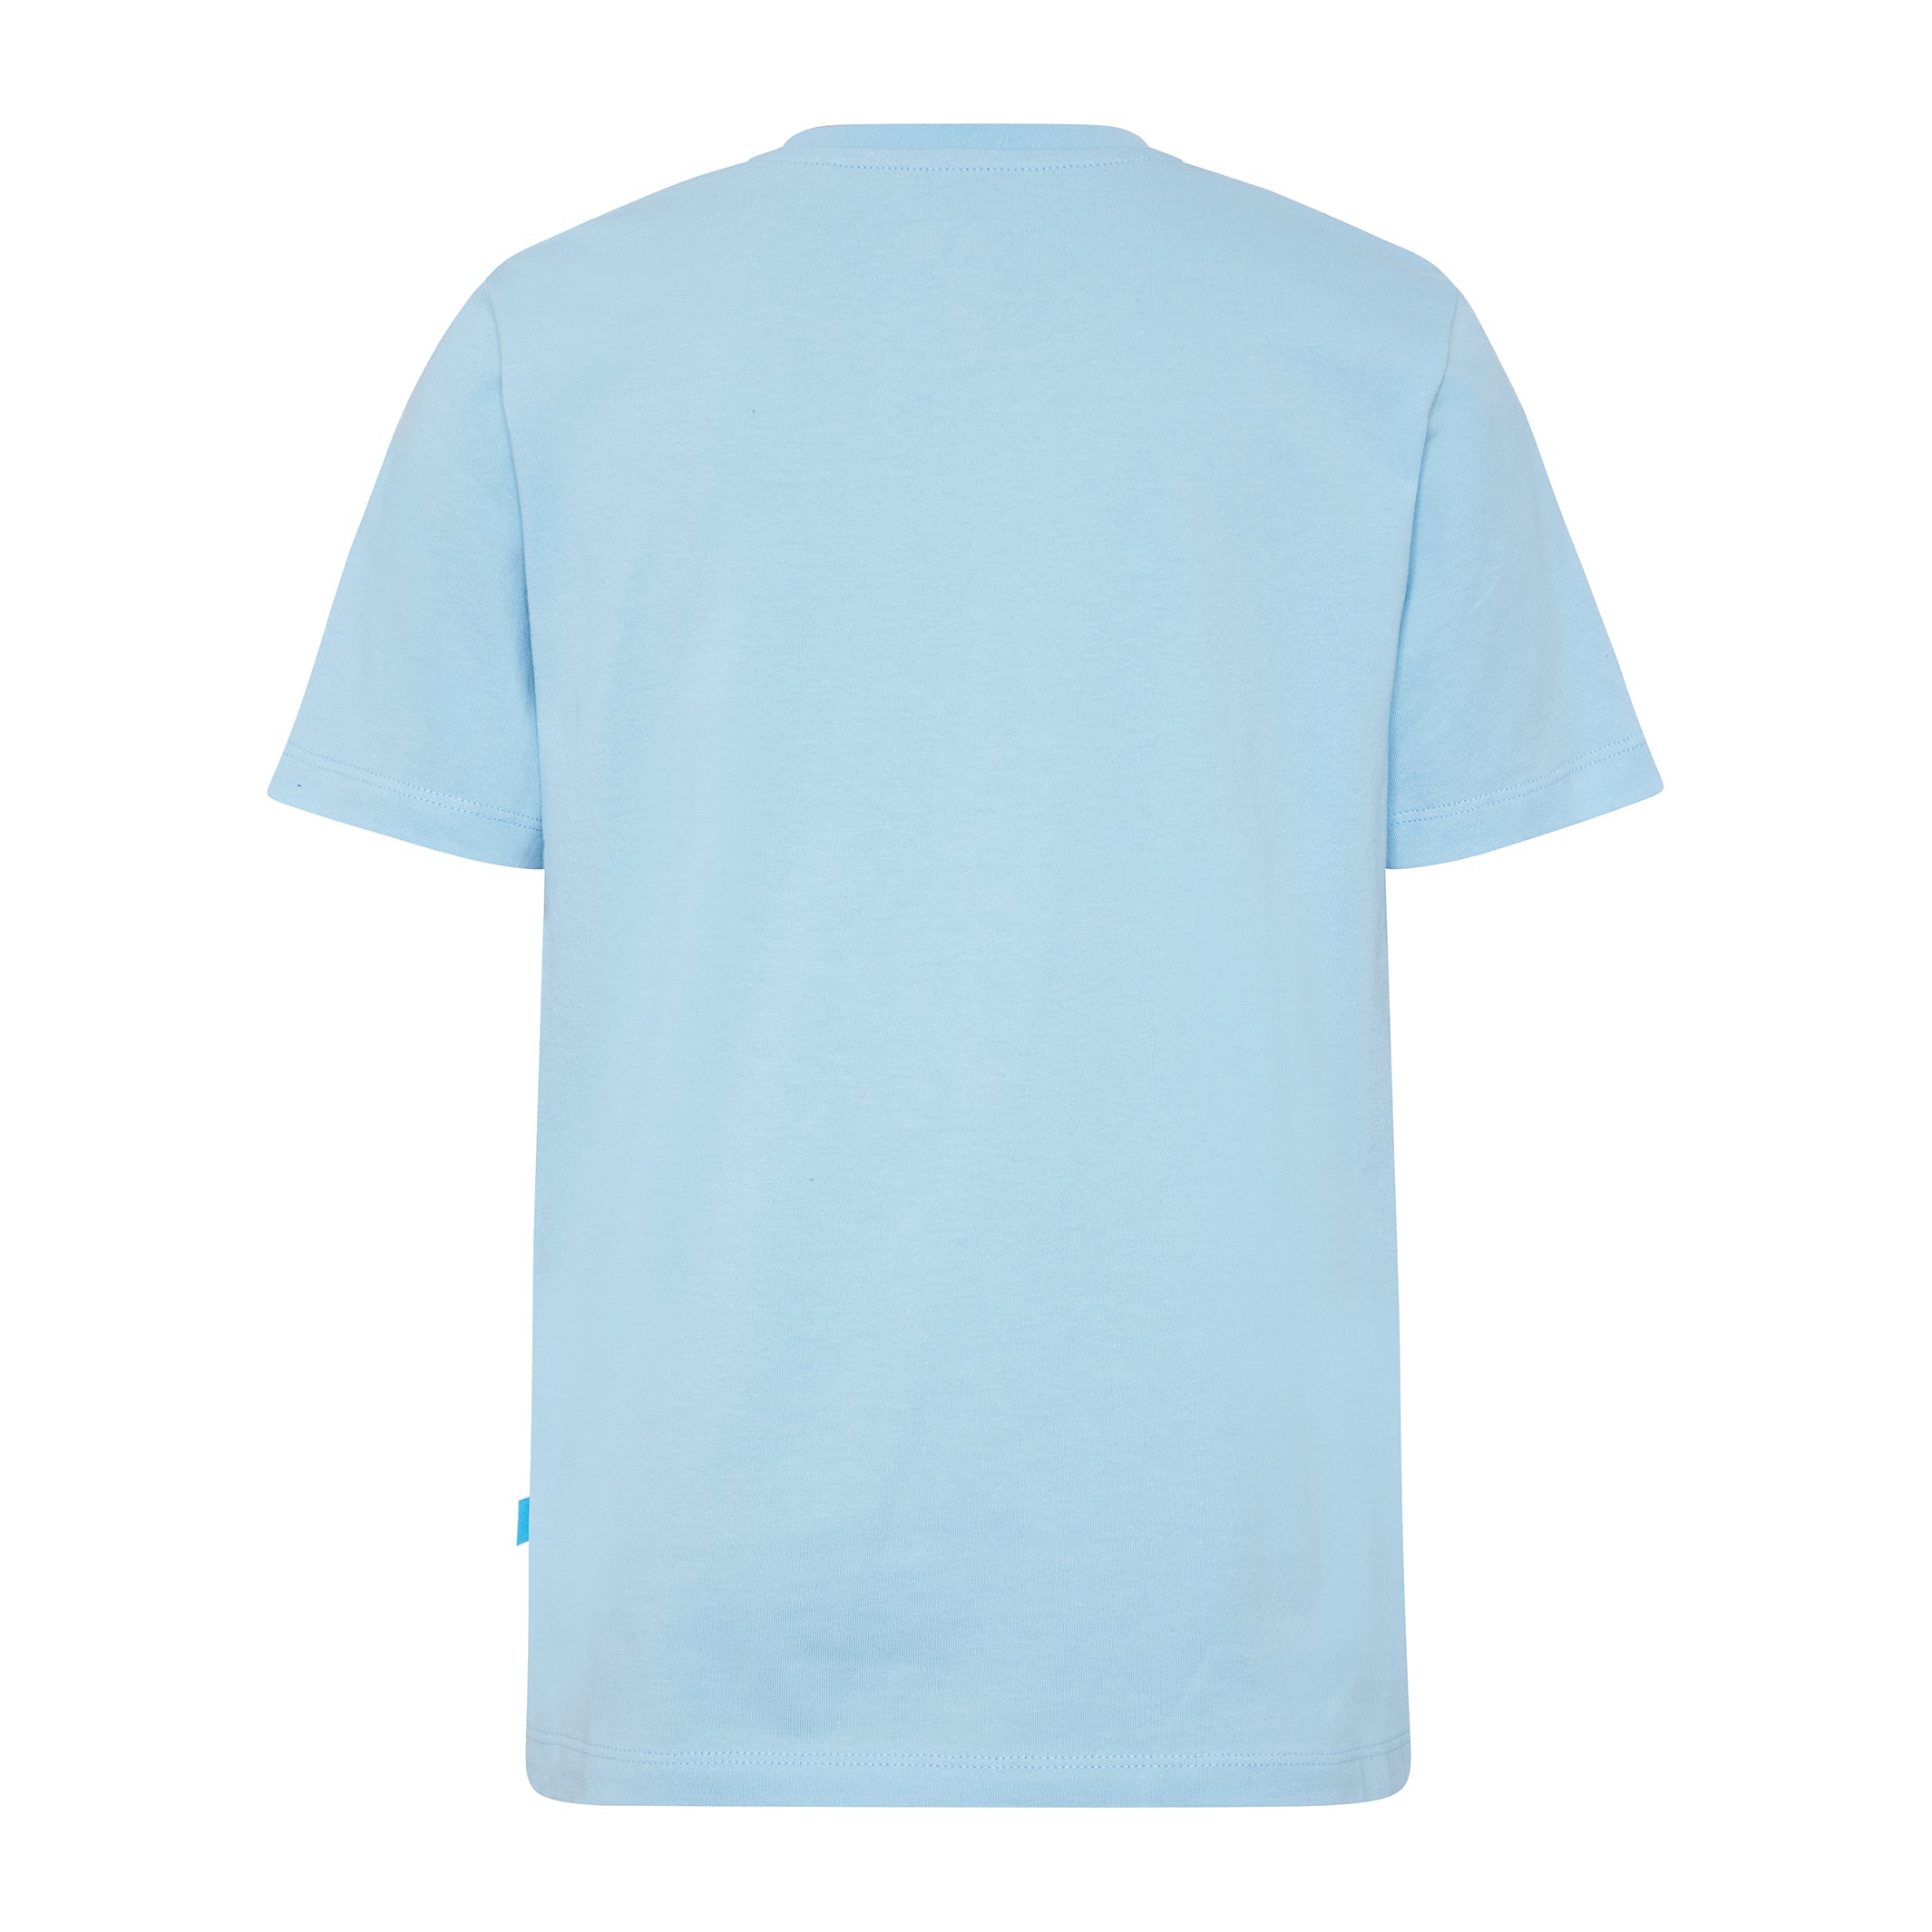 Boy's Blue T-Shirt Chequered Print Back View